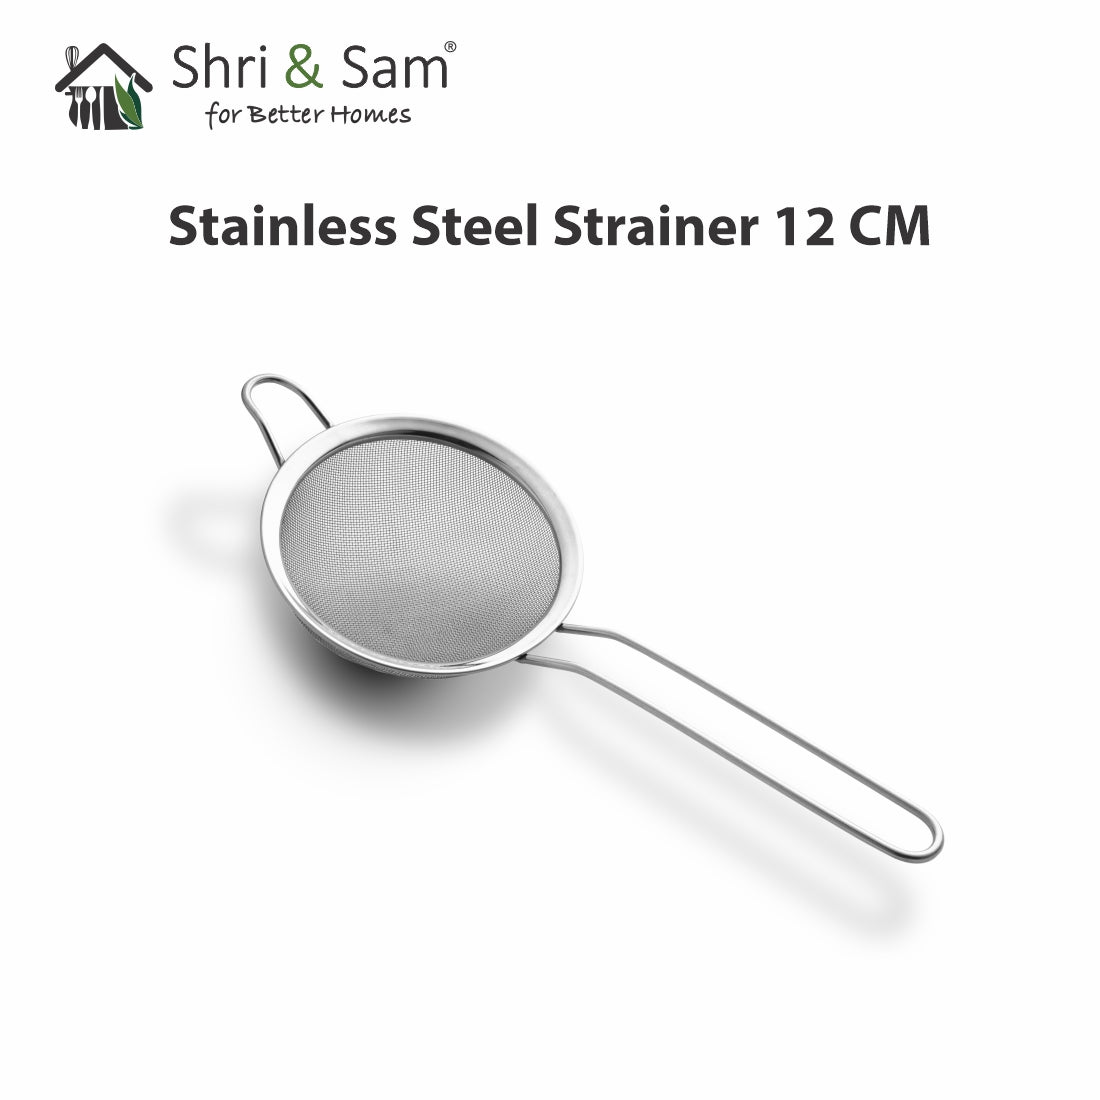 Stainless Steel Strainer 12 CM